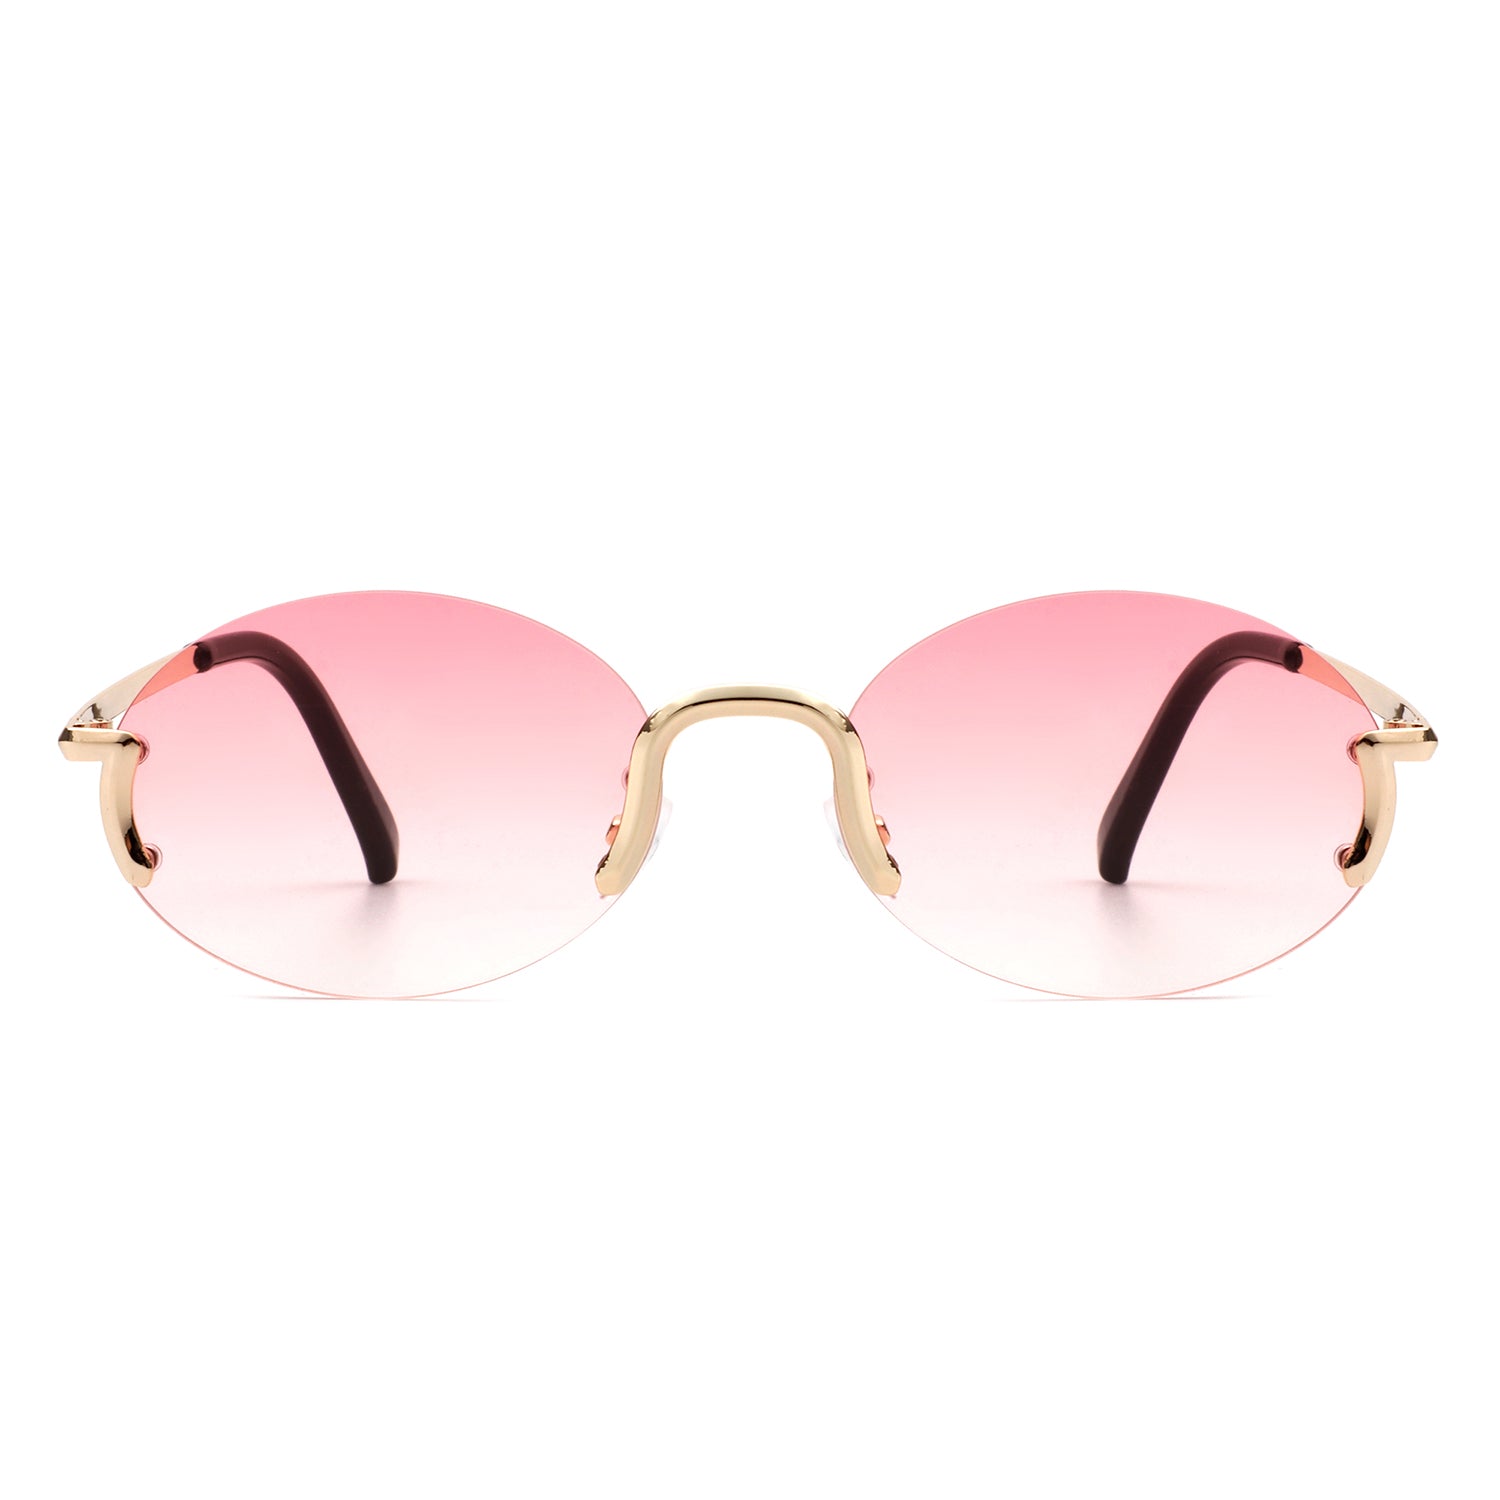 Elysian Retro Square Rimless Fashion Sunglasses